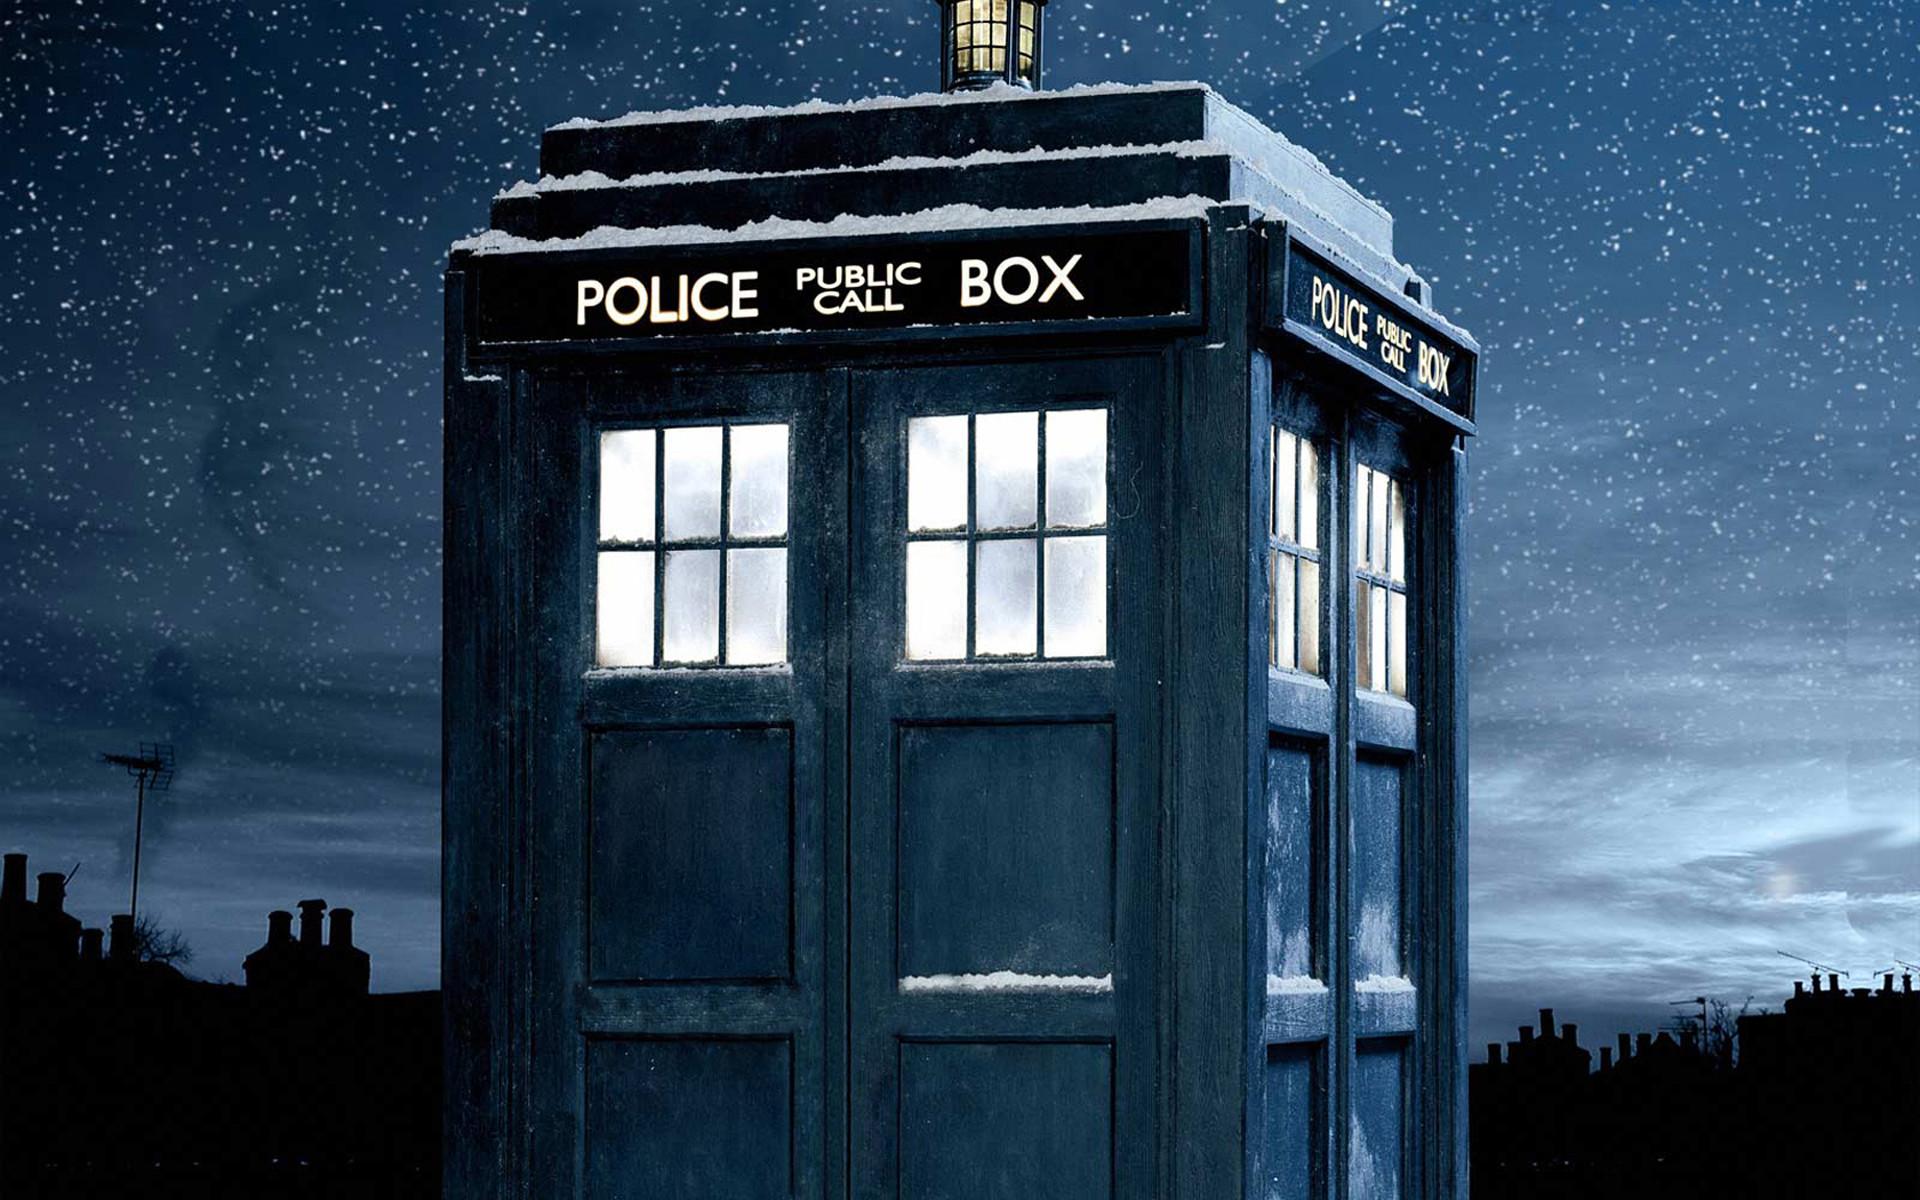 Doctor Who Ipad wallpaper – 1115199